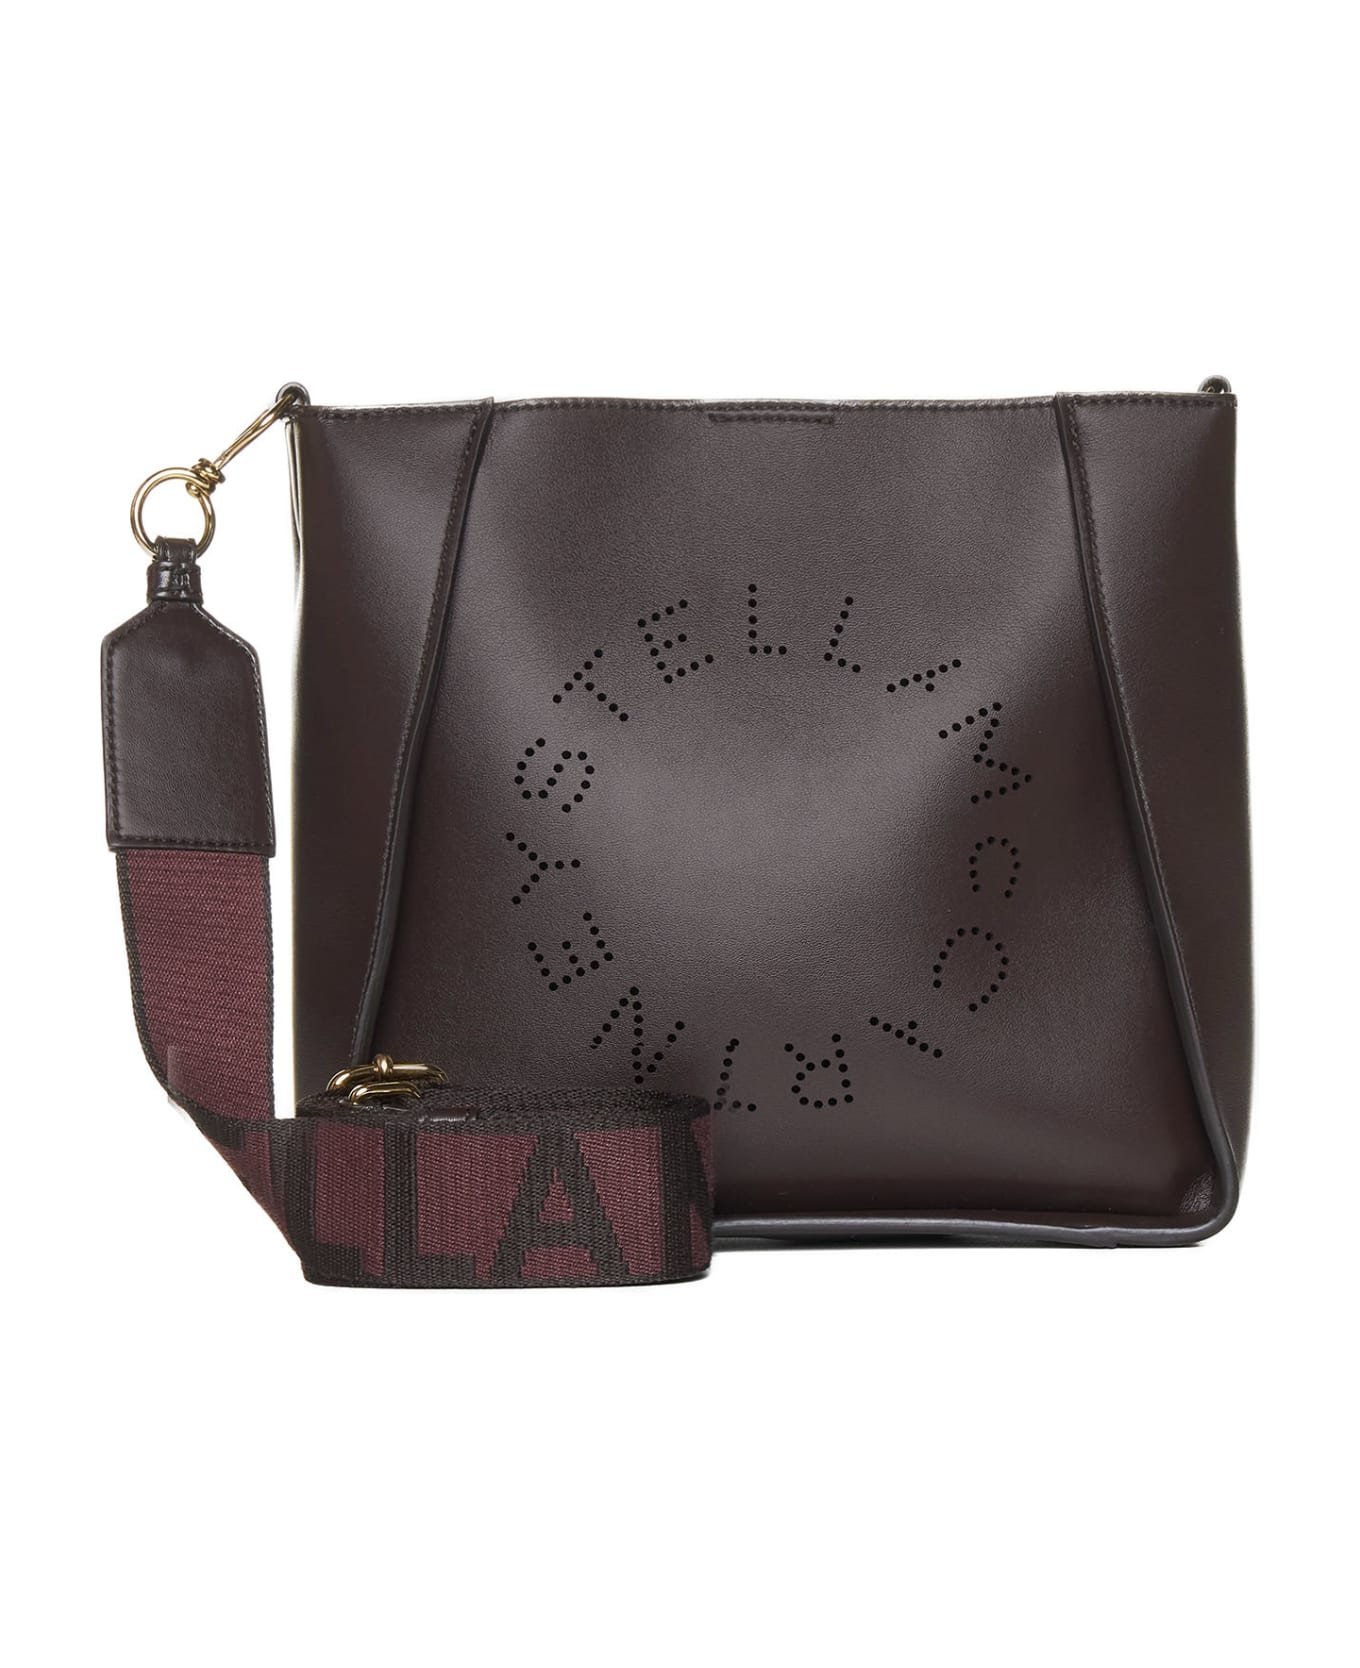 Stella McCartney Shoulder Bag - Chocolate